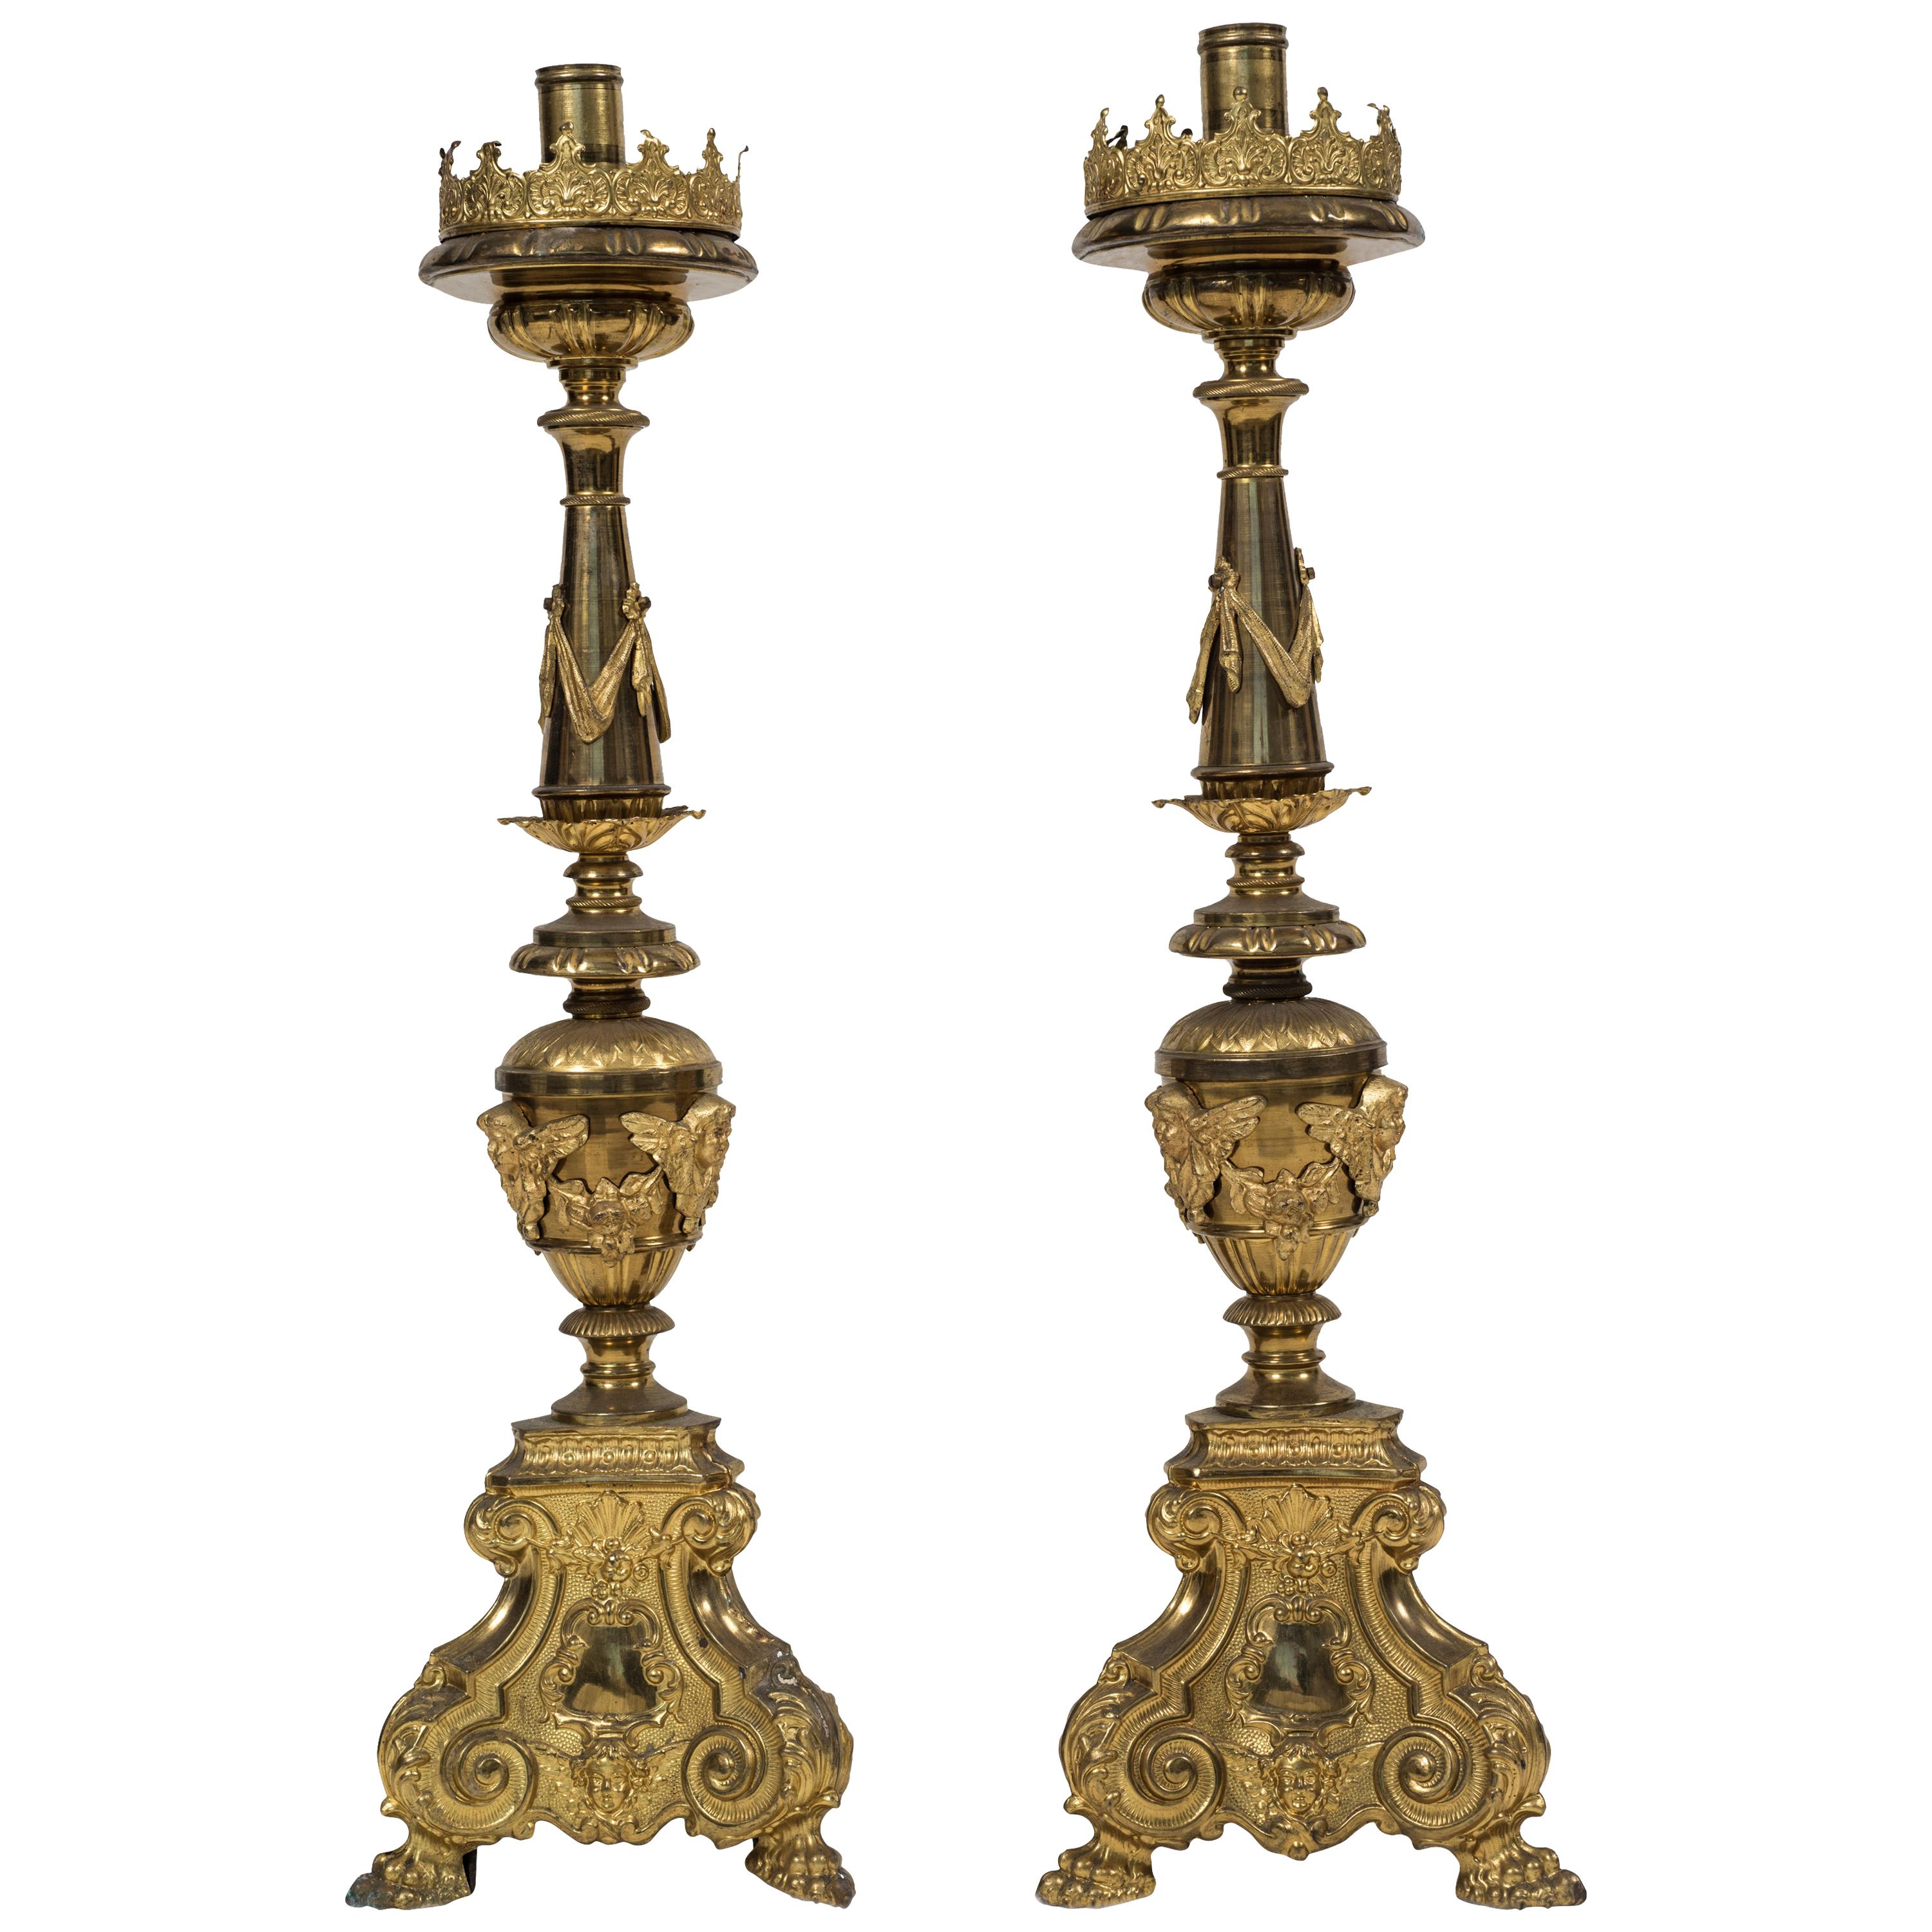 Antique Pair of Candlesticks, Italy, 18th Century